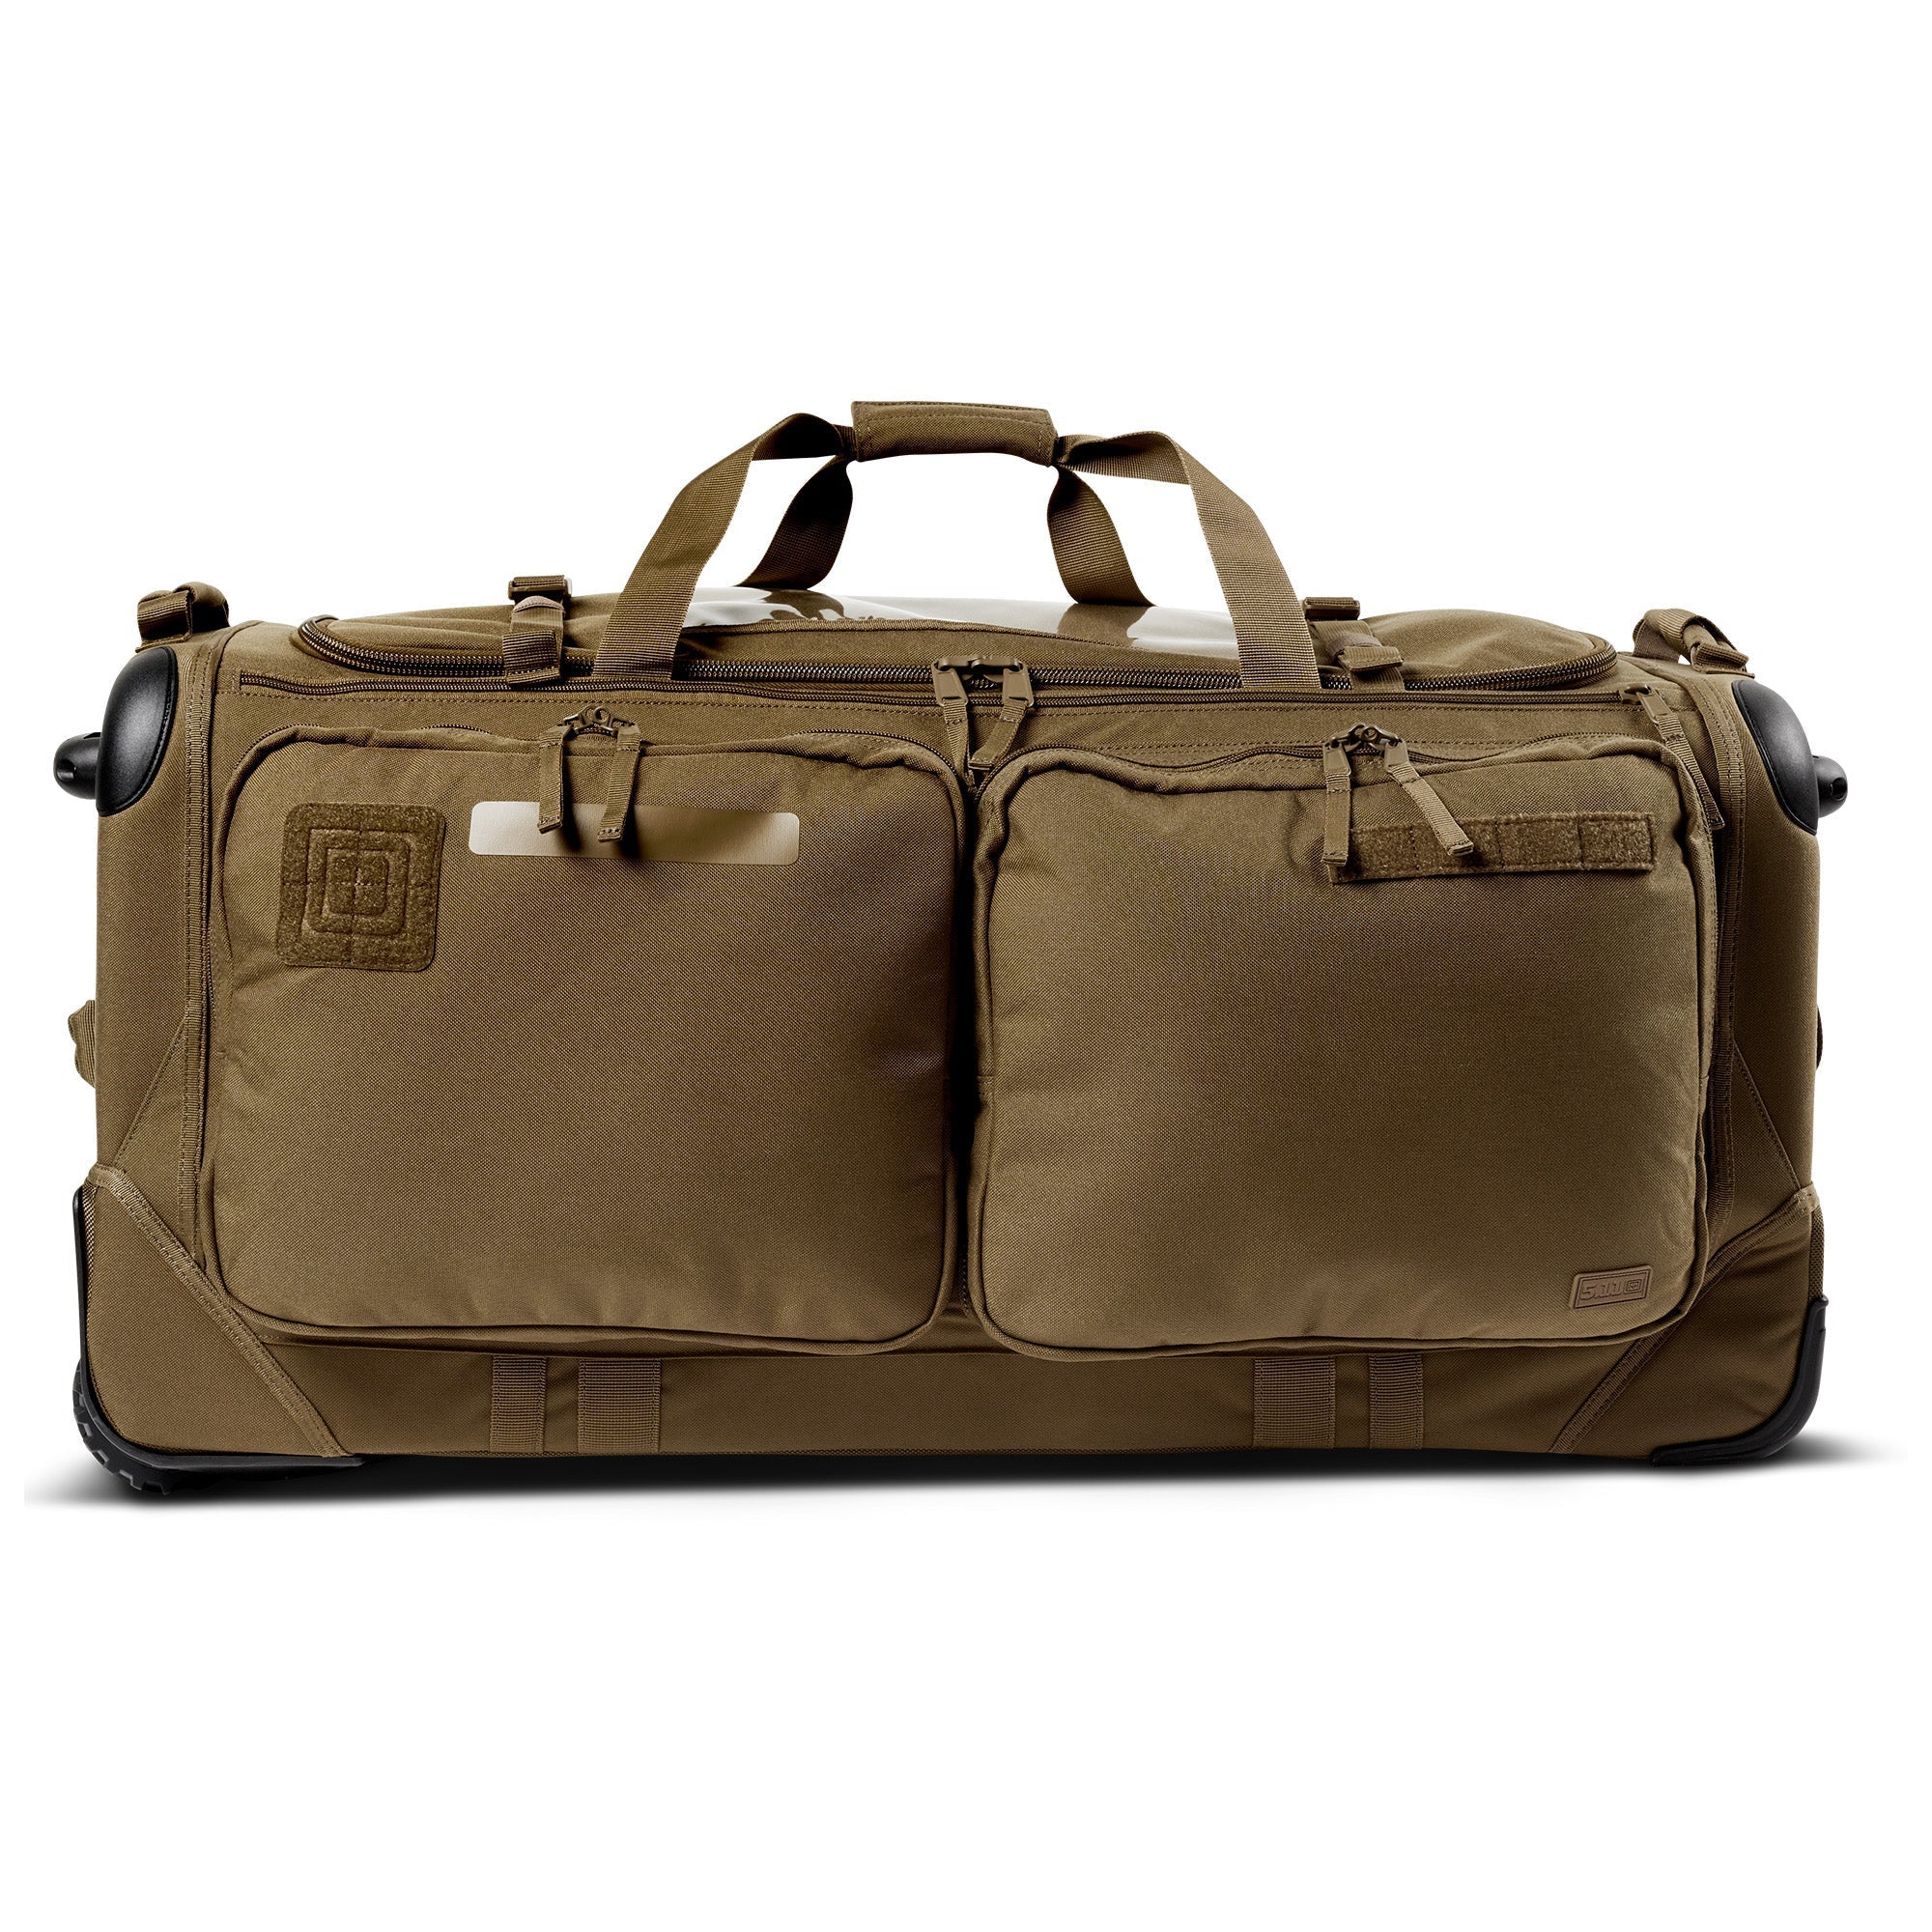 5.11 Tactical SOMS 3.0 126L Rolling Duffle Bag Kangaroo Tactical Gear Australia Supplier Distributor Dealer